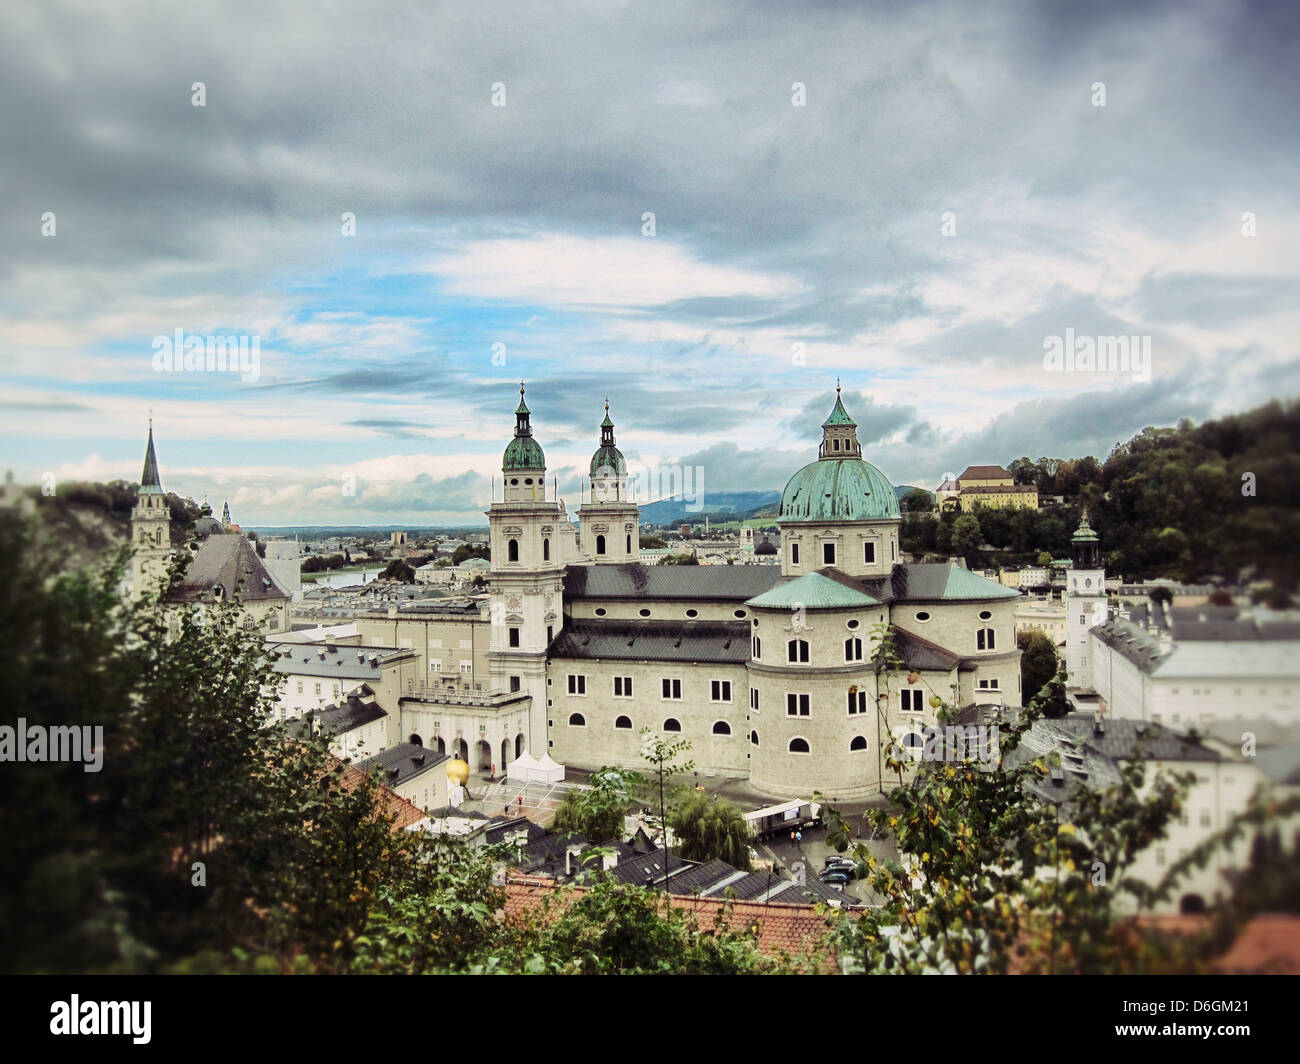 Historical landmark in quaint town, Salzburg, Austria Stock Photo